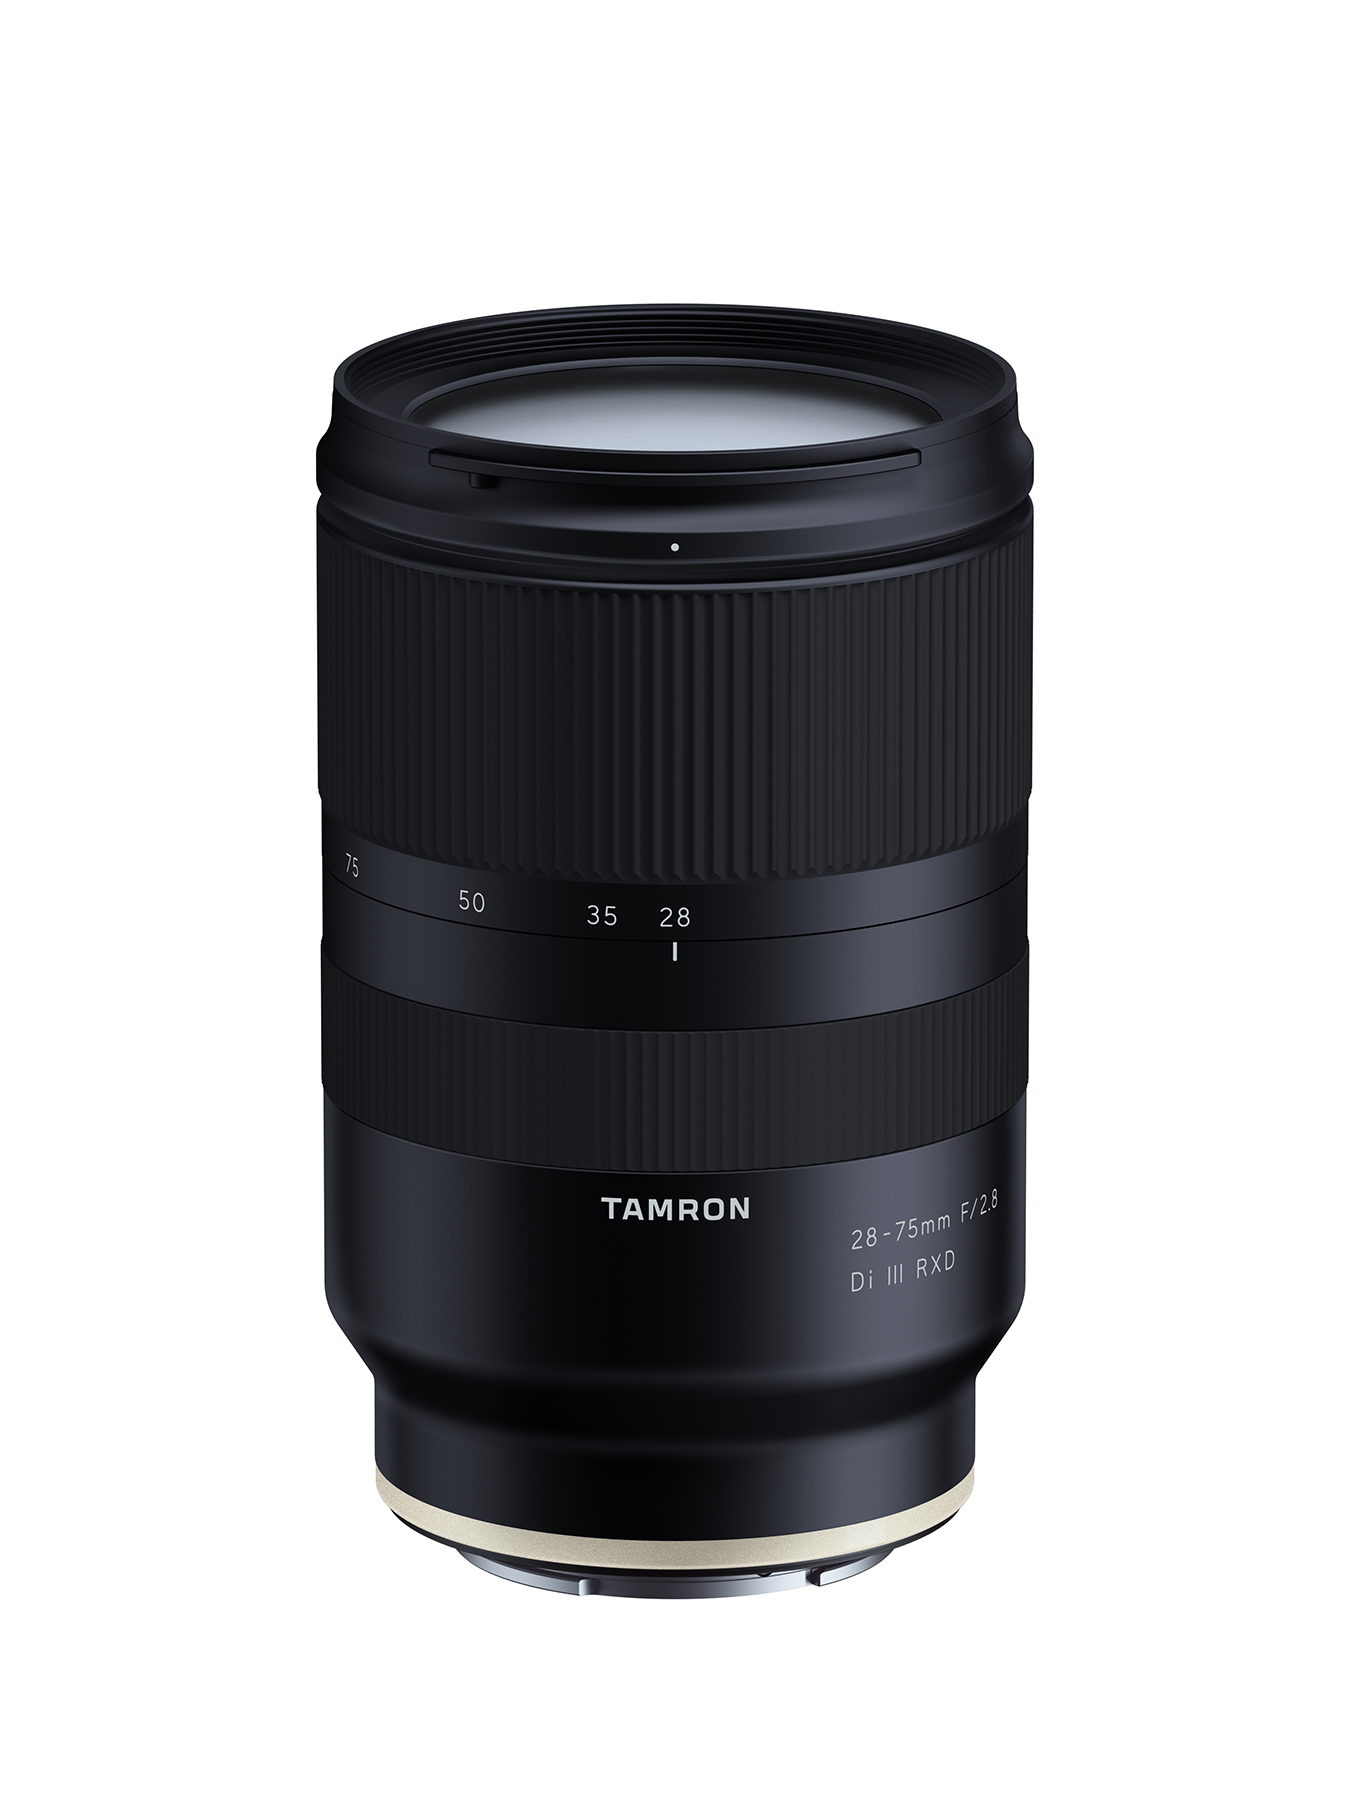 Press Release: Tamron's New 28-75mm Lens - Bergen County Camera Blog